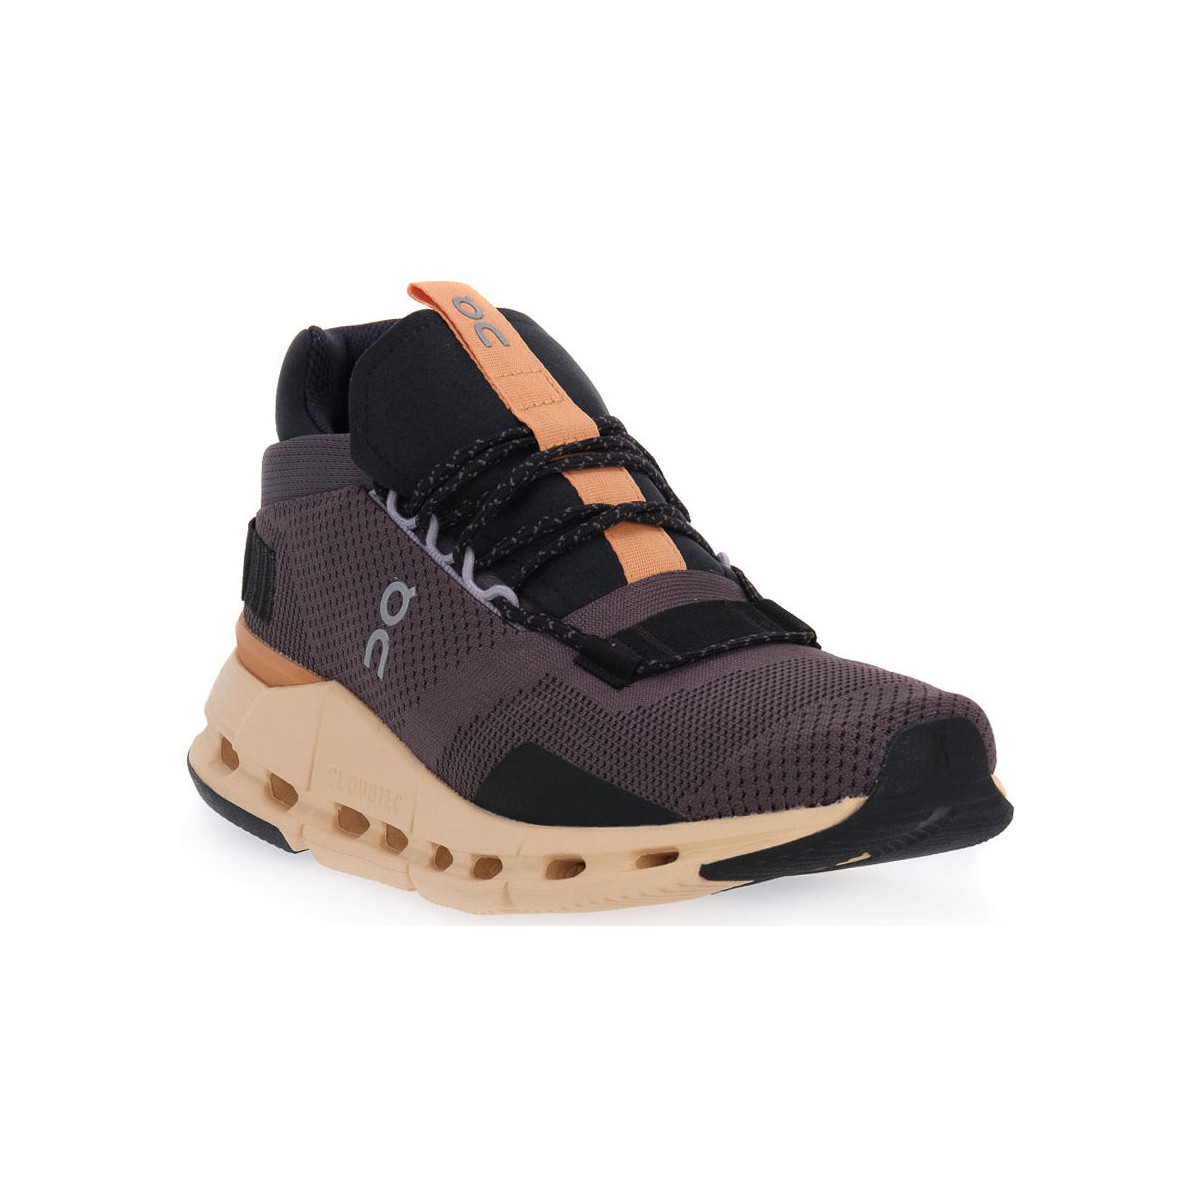 Skor Dam Sneakers On CLOUDNOVA Svart